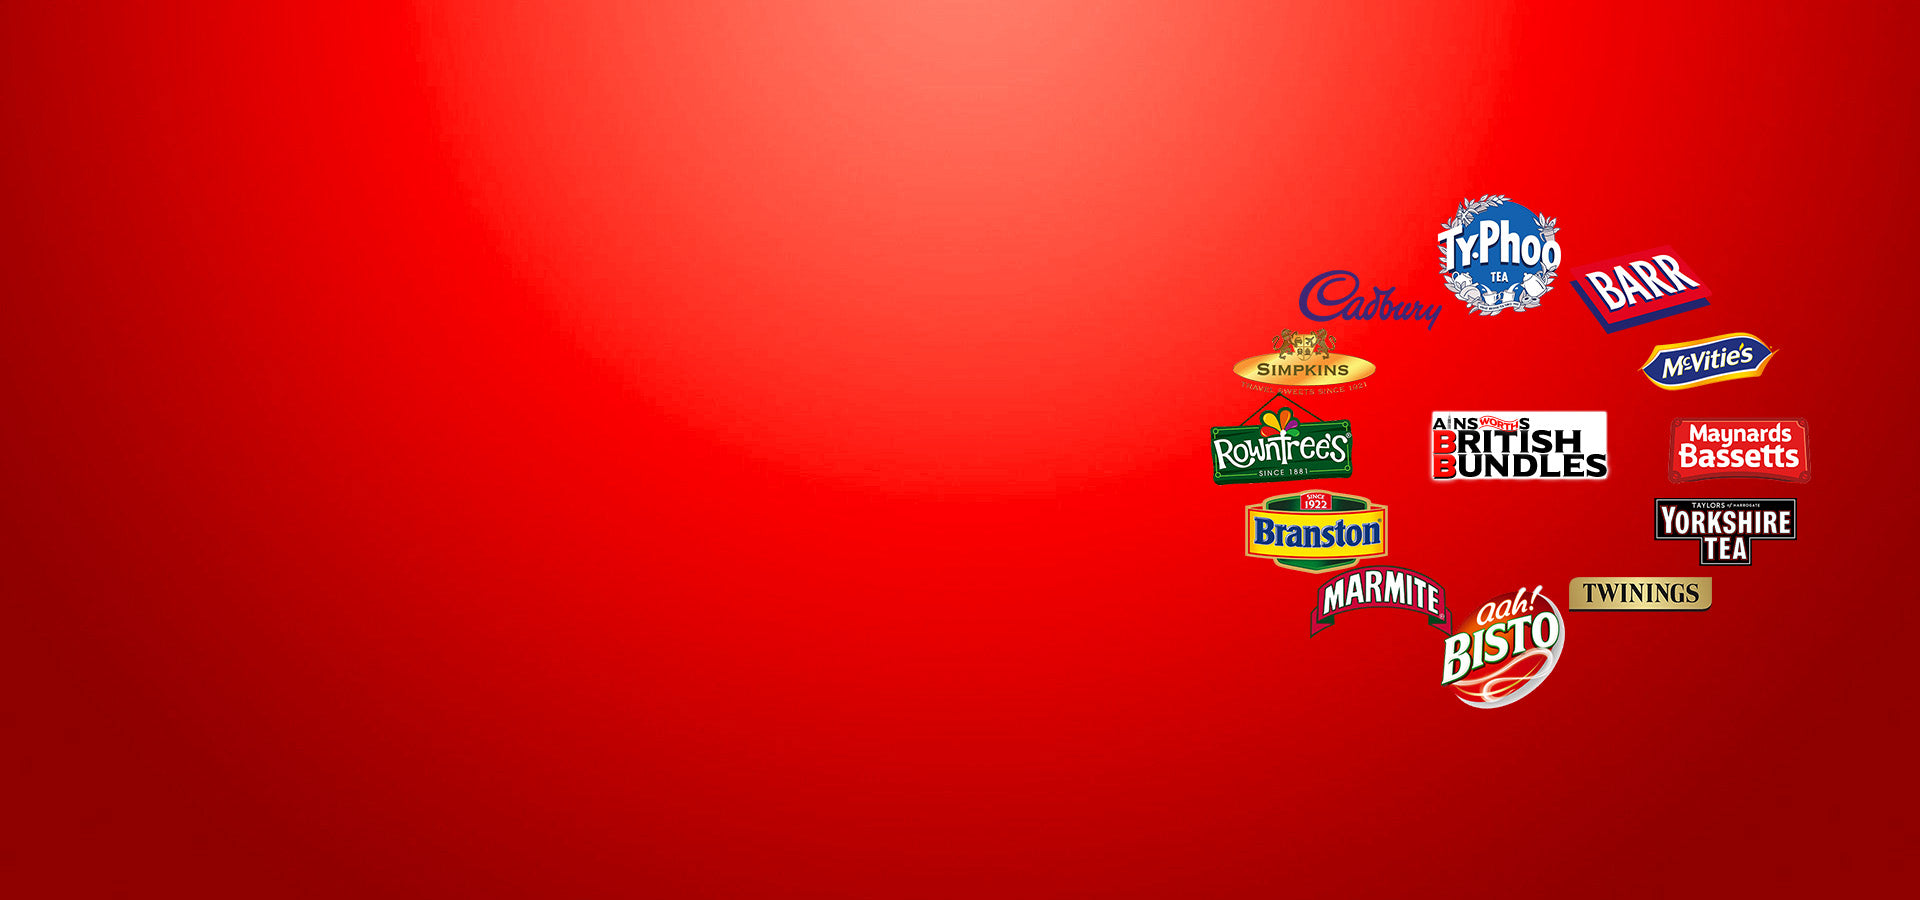 British Bundles Home Page slider image 2 - British brand logos in a circle on a red gradient background - Typhoo Tea, Barr, McVitie's, Maynard's Bassetts, Yorkshire Tea, Twinings, Ahh Bisto, Marmite, Branston, Rowntree's, Simpkins, and Cadbury